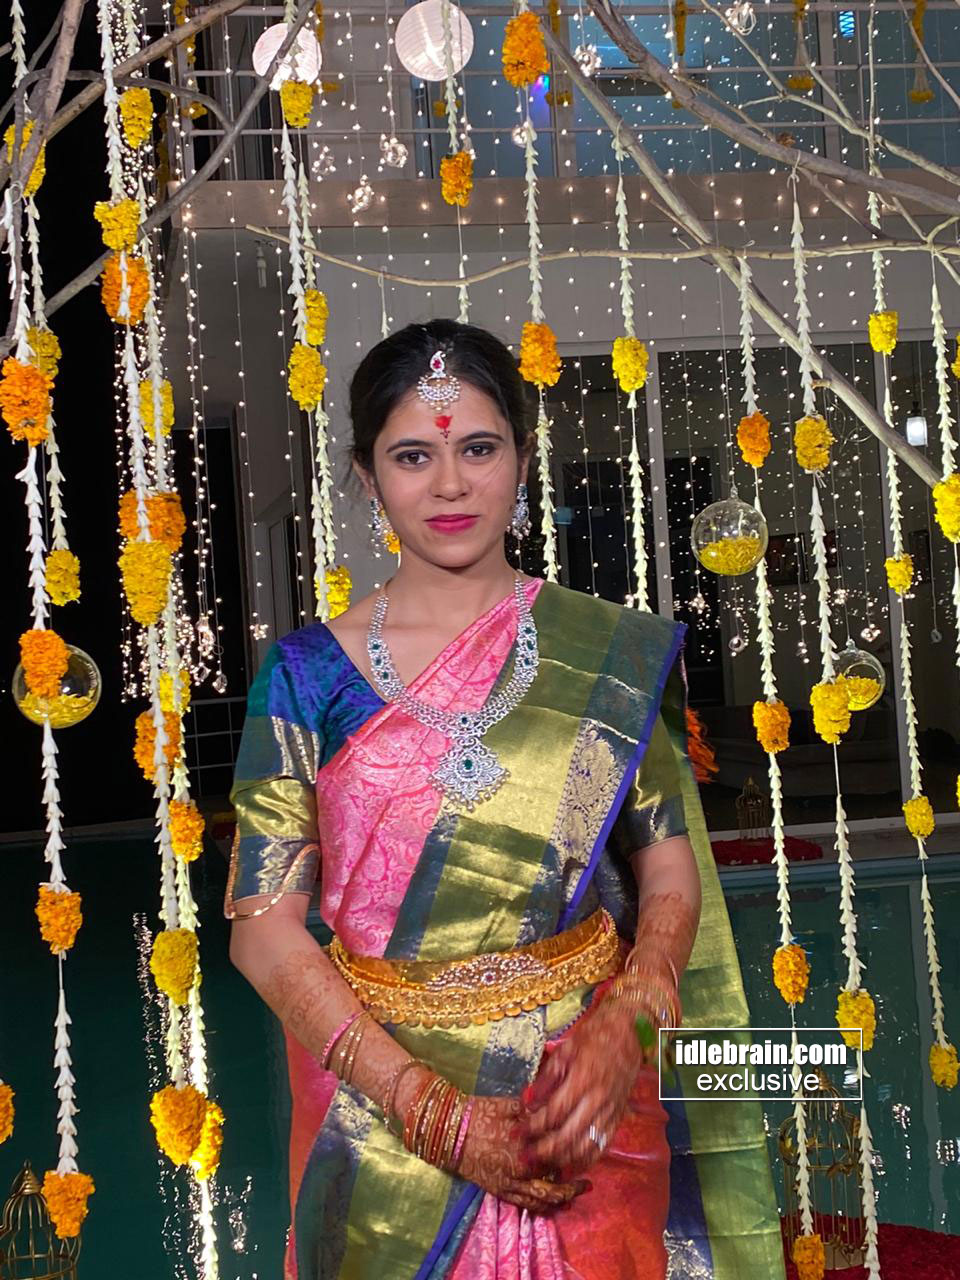 nikhil-wedding-14may2.jpg